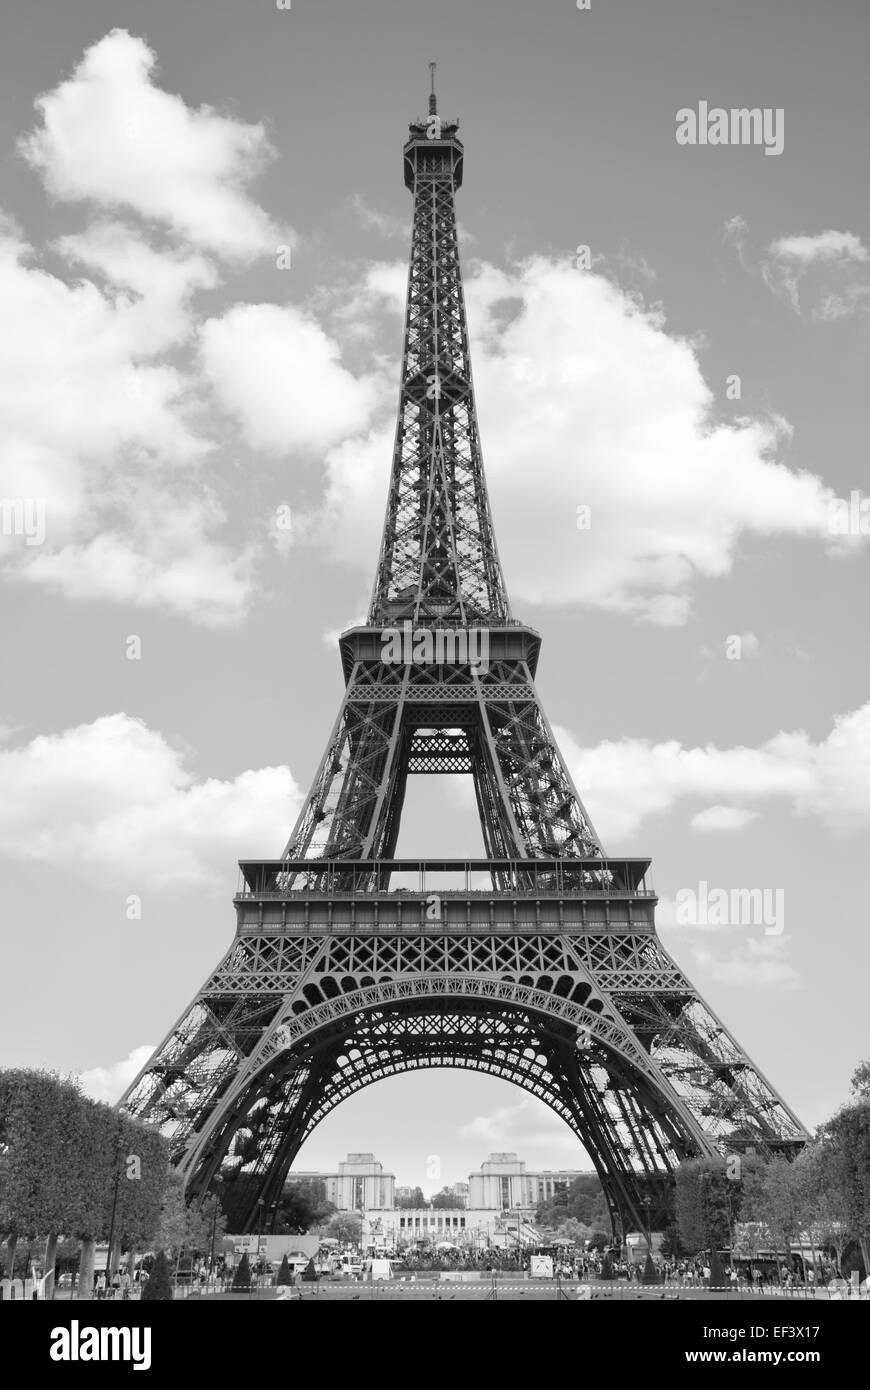 Eiffel tower, Paris. Black and white image Stock Photo